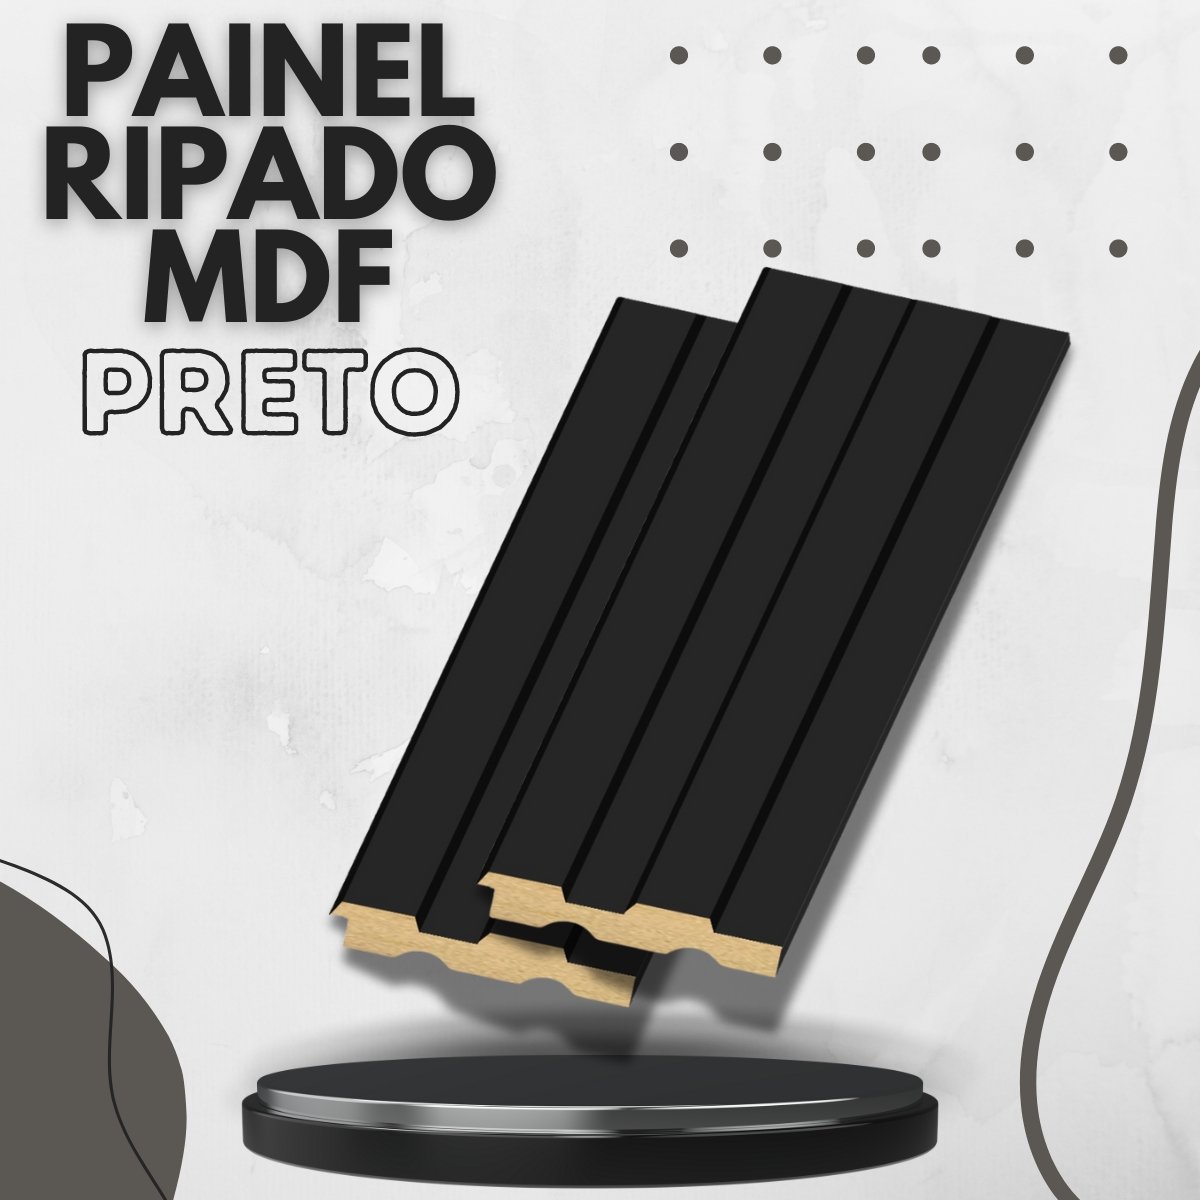 Painel Ripado Mdf 2700x62x18mm - Preto - 2